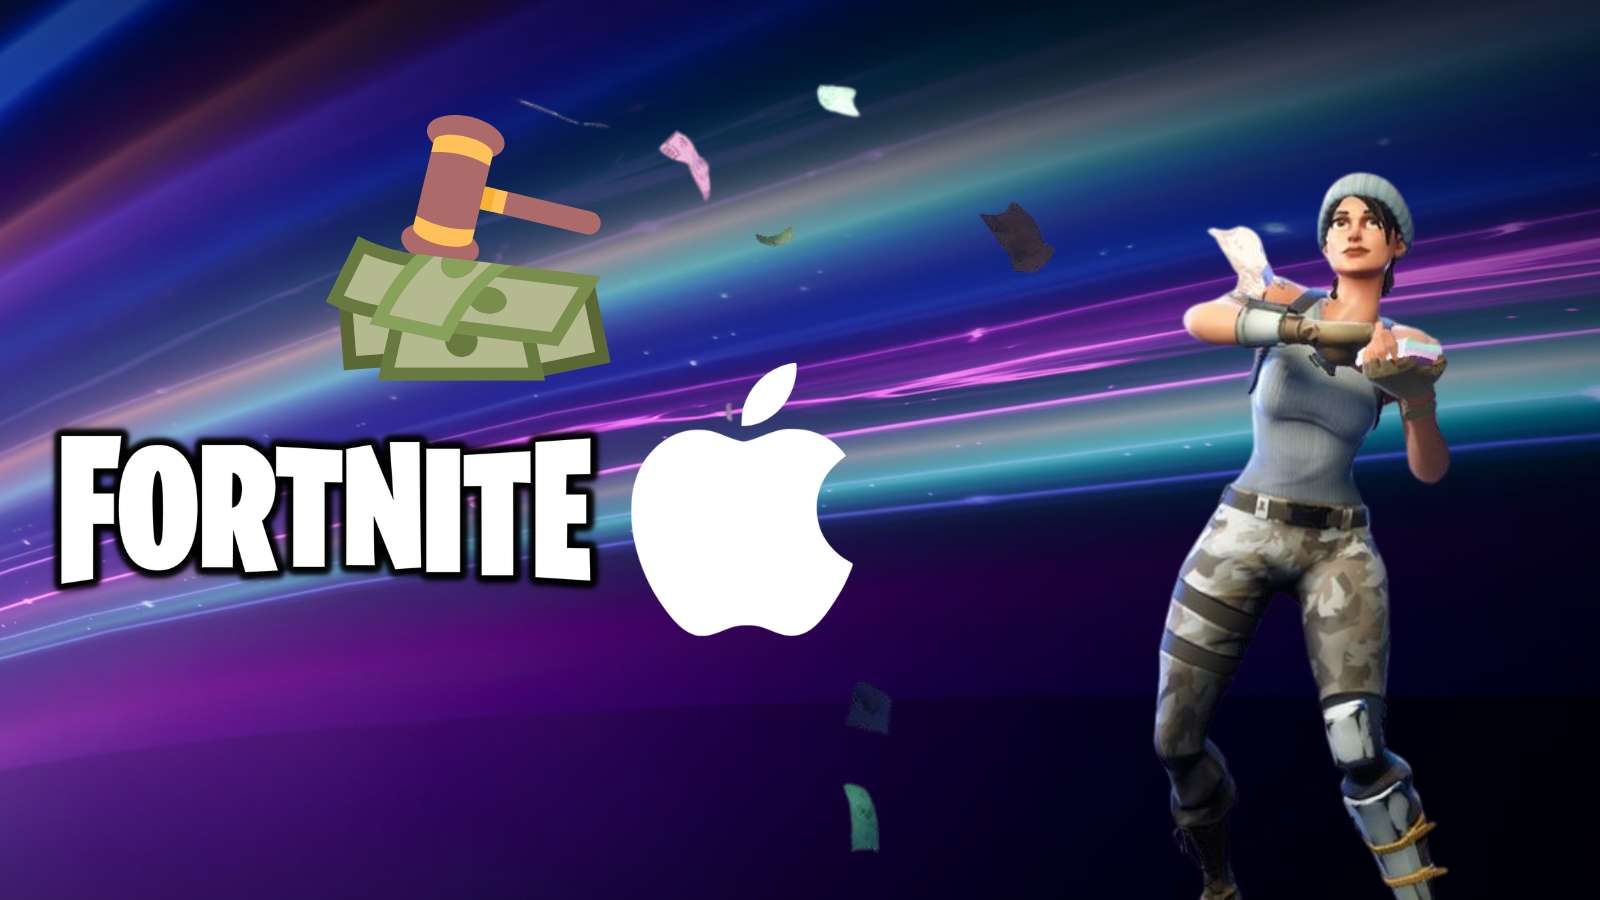 Fortnite make it rain emote with apple logo